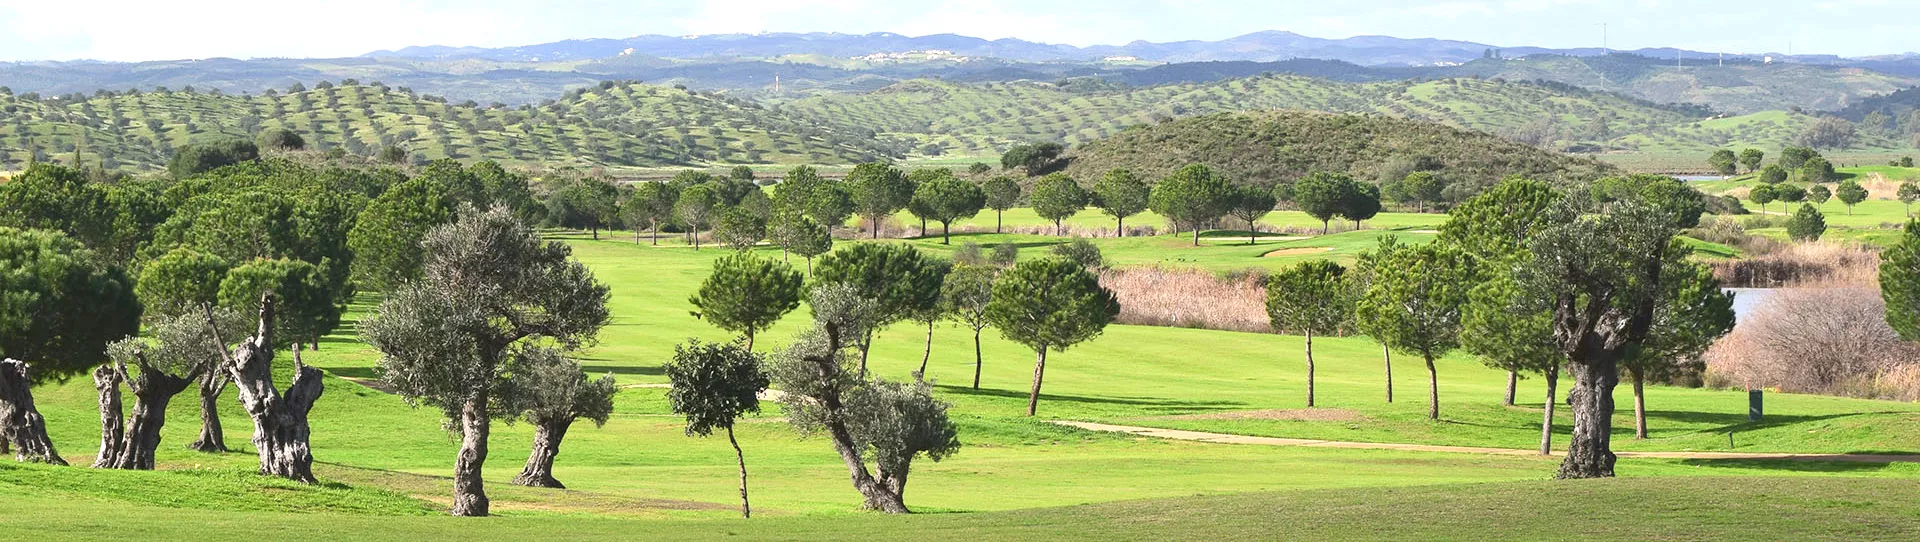 Portugal golf courses - Isla Canela Links (Spain) - Photo 1